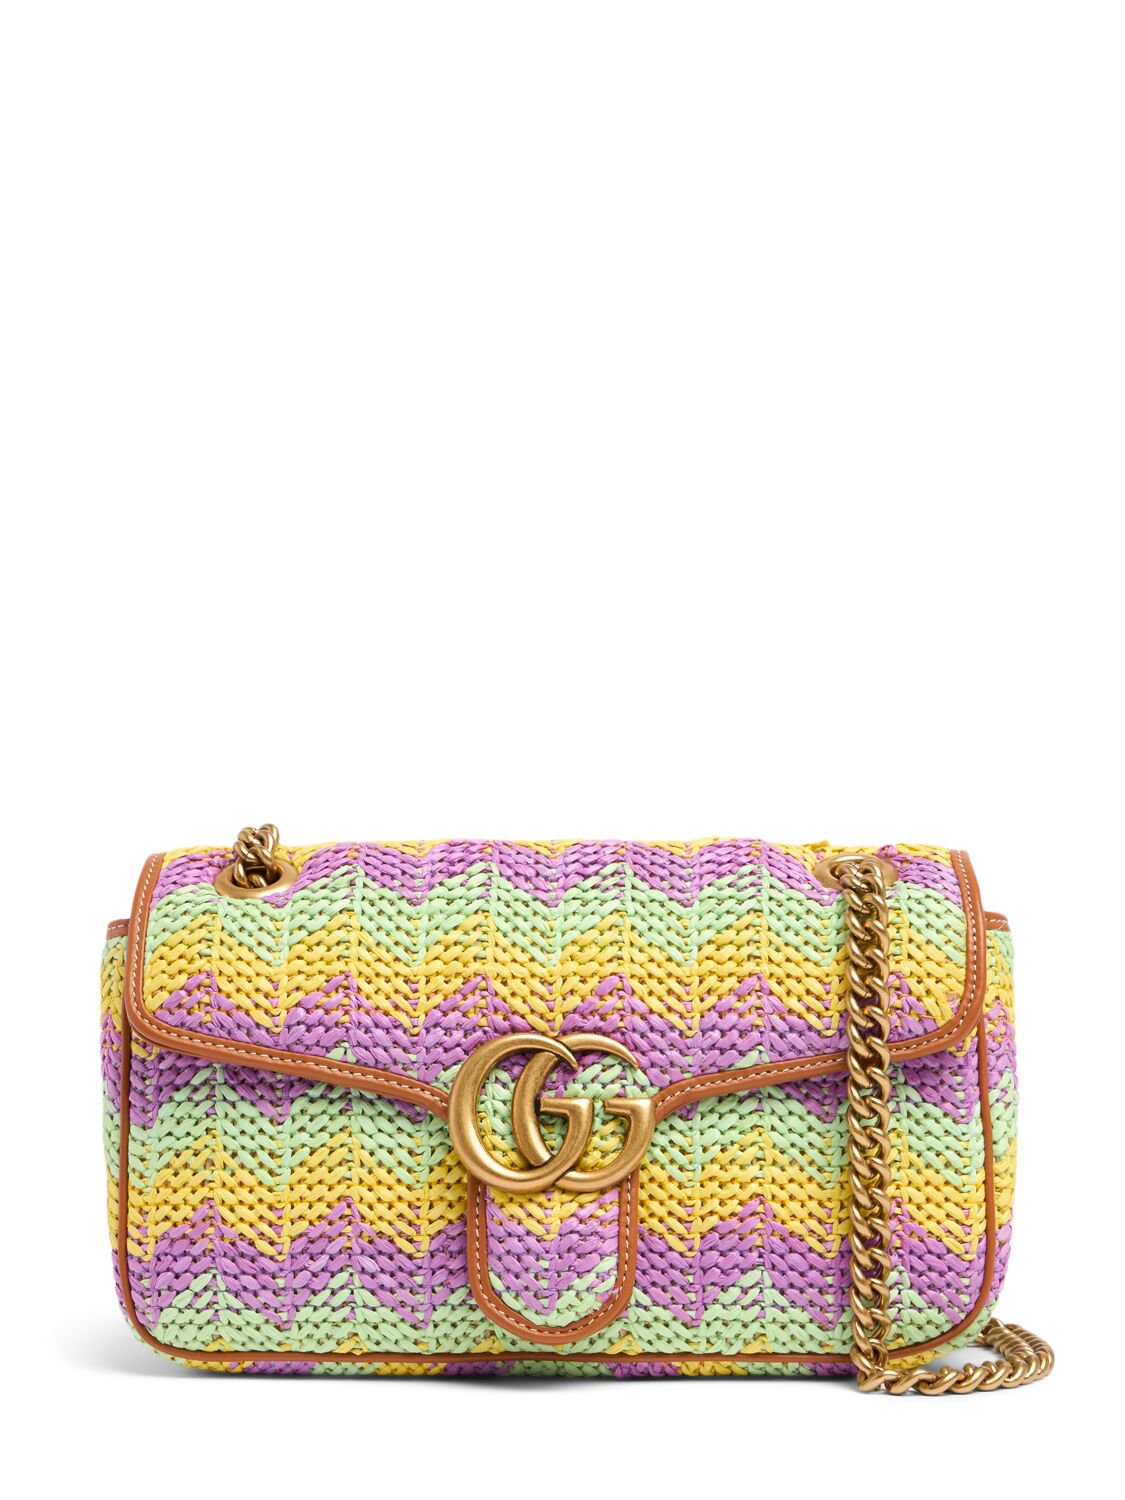 Gucci Gg Marmont Crochet Shoulder Bag In Multicolor